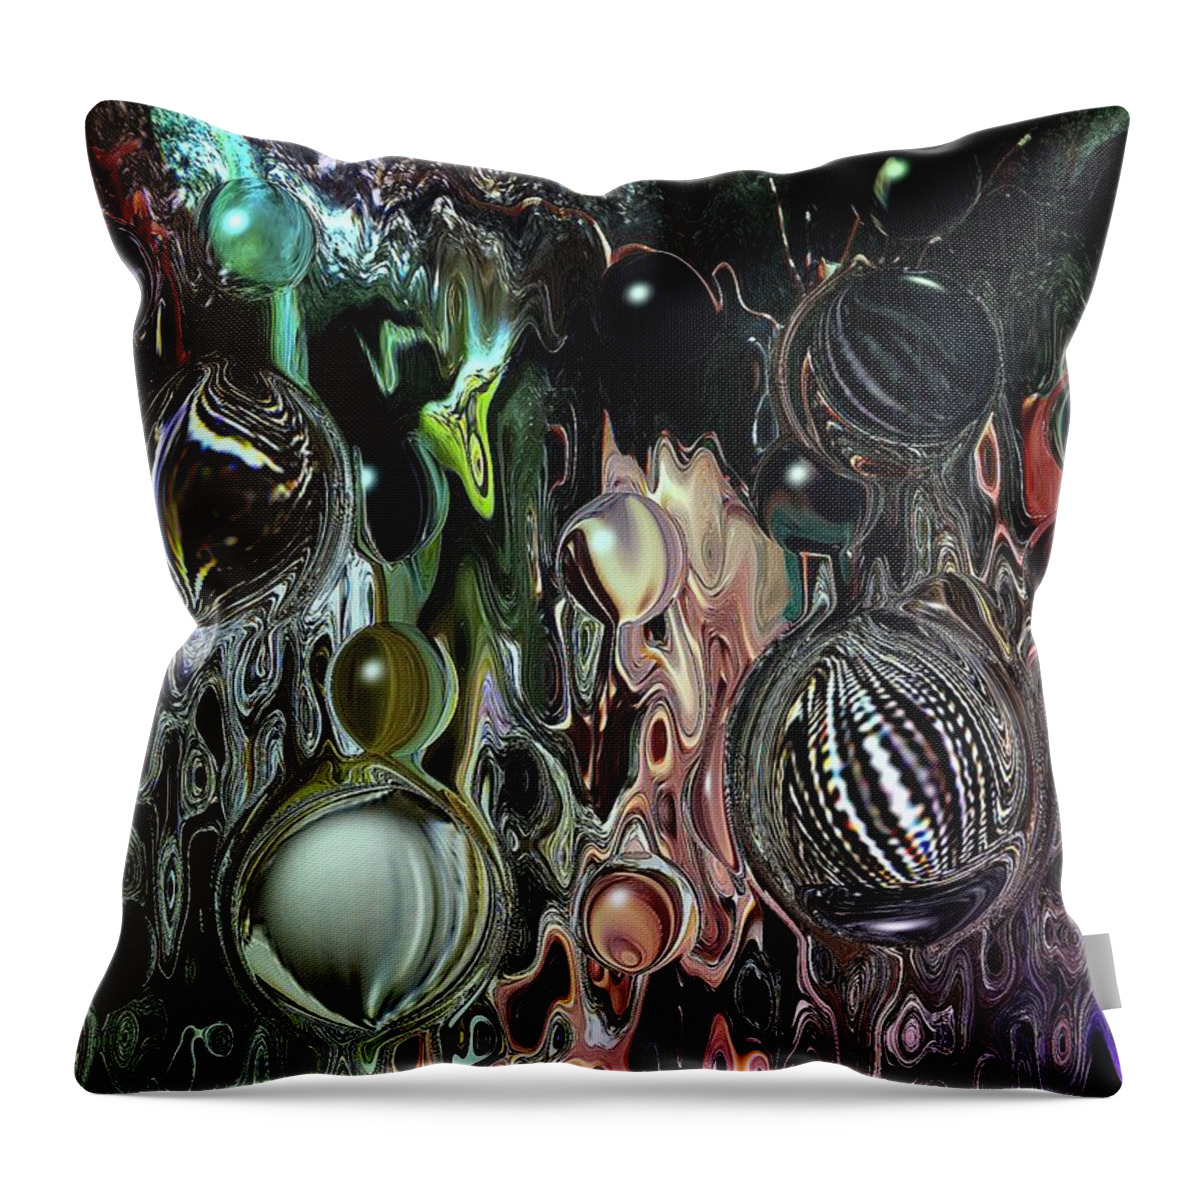 Digital Art Throw Pillow featuring the digital art Abstract #172 by Belinda Cox